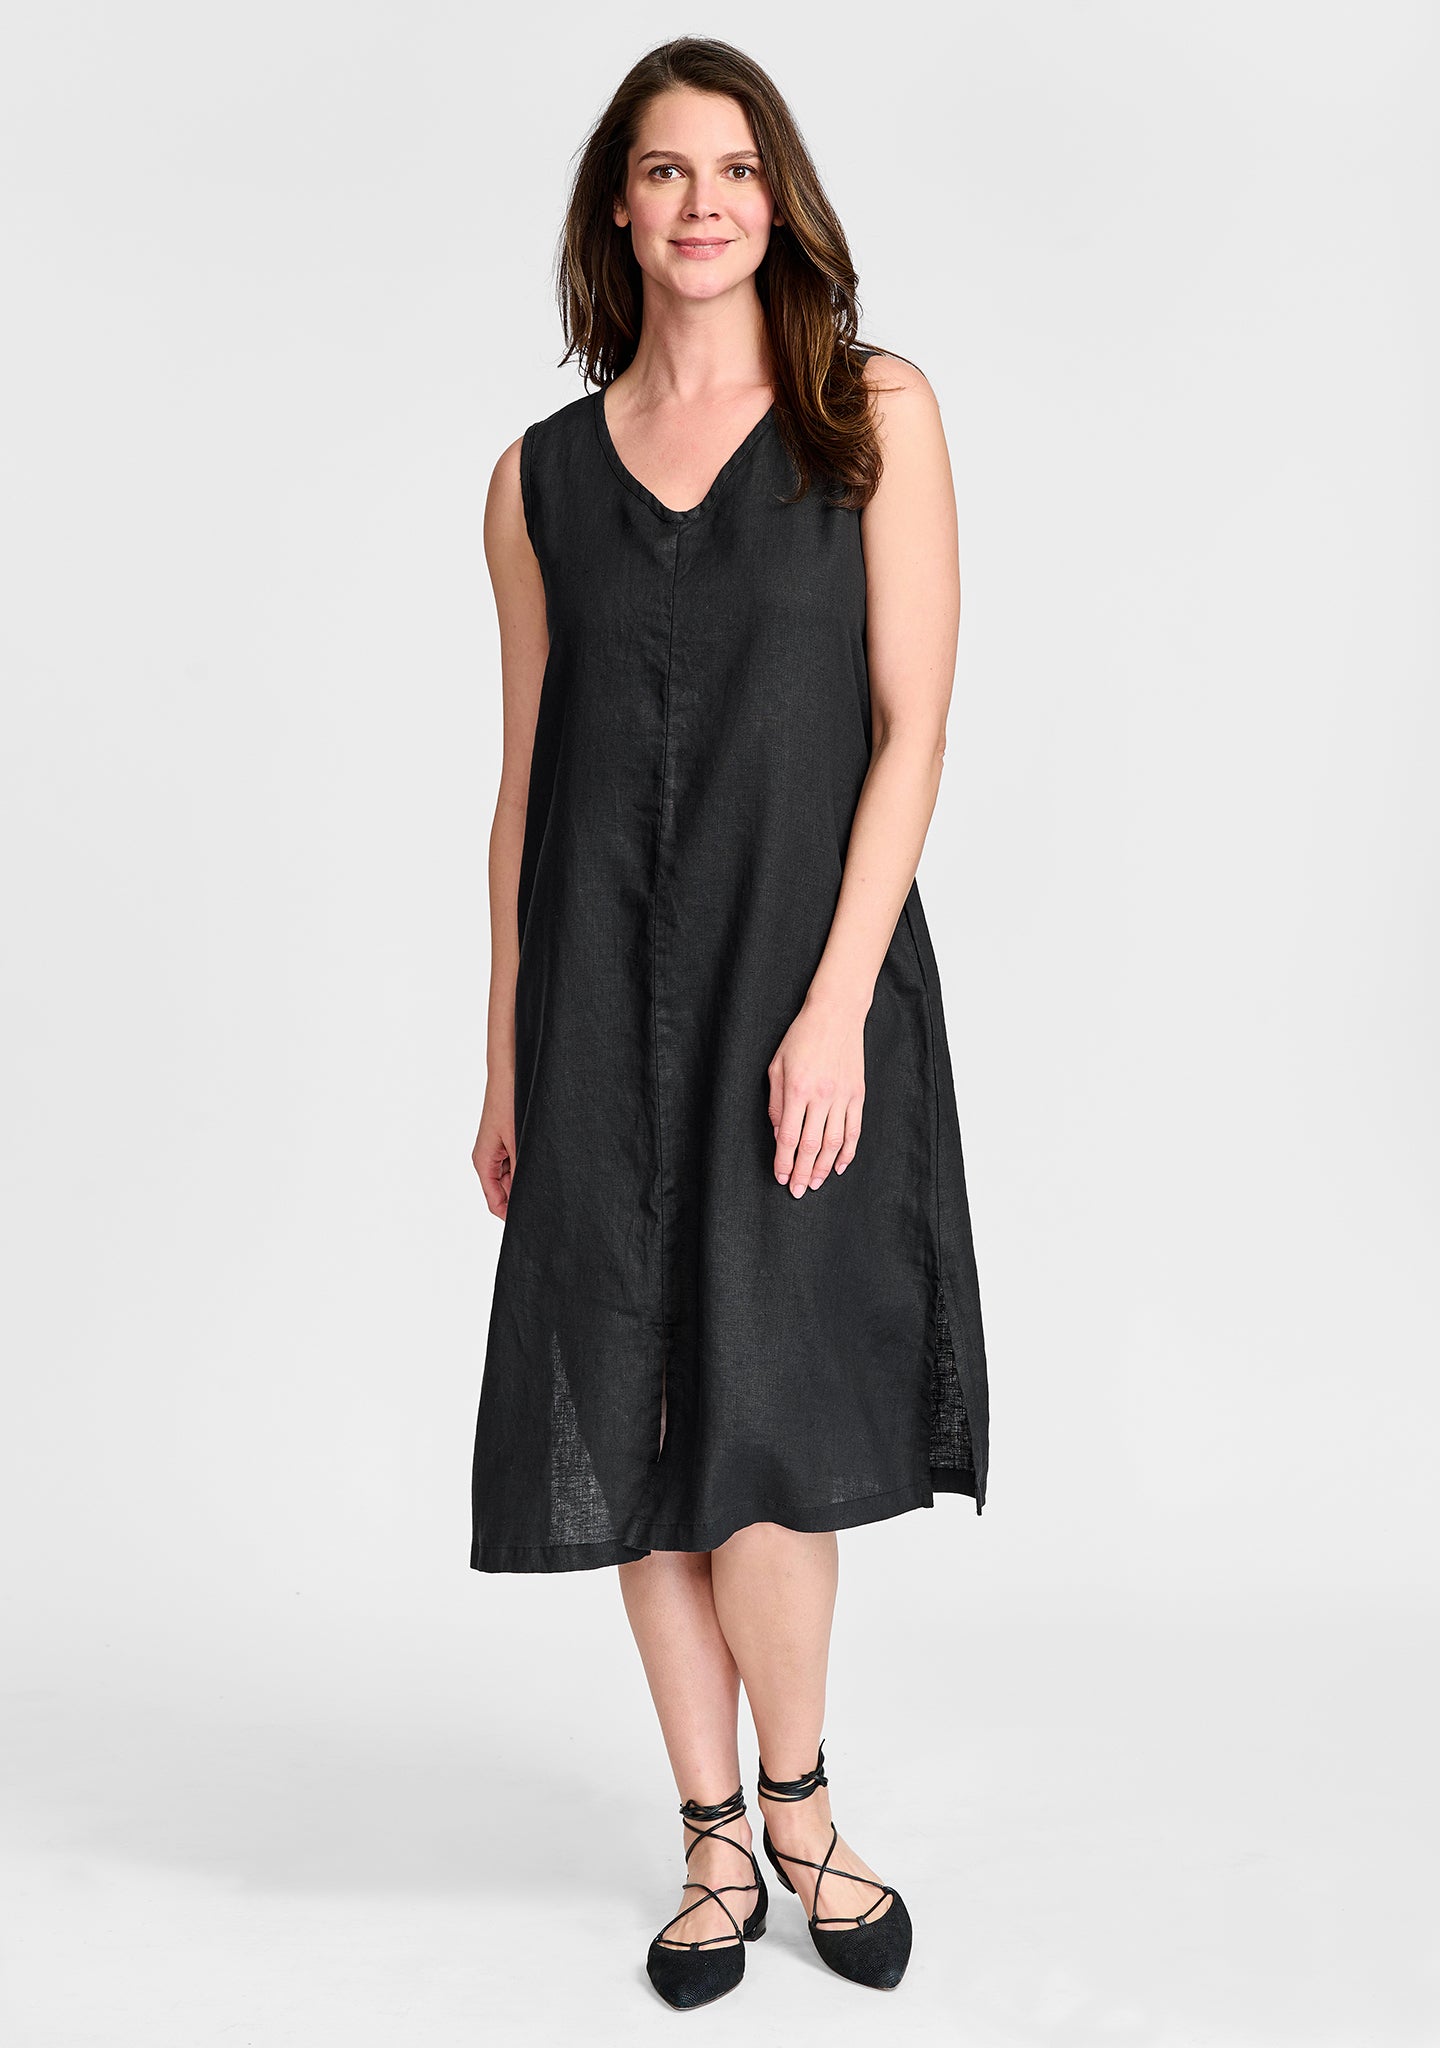 FLAX linen dress in black